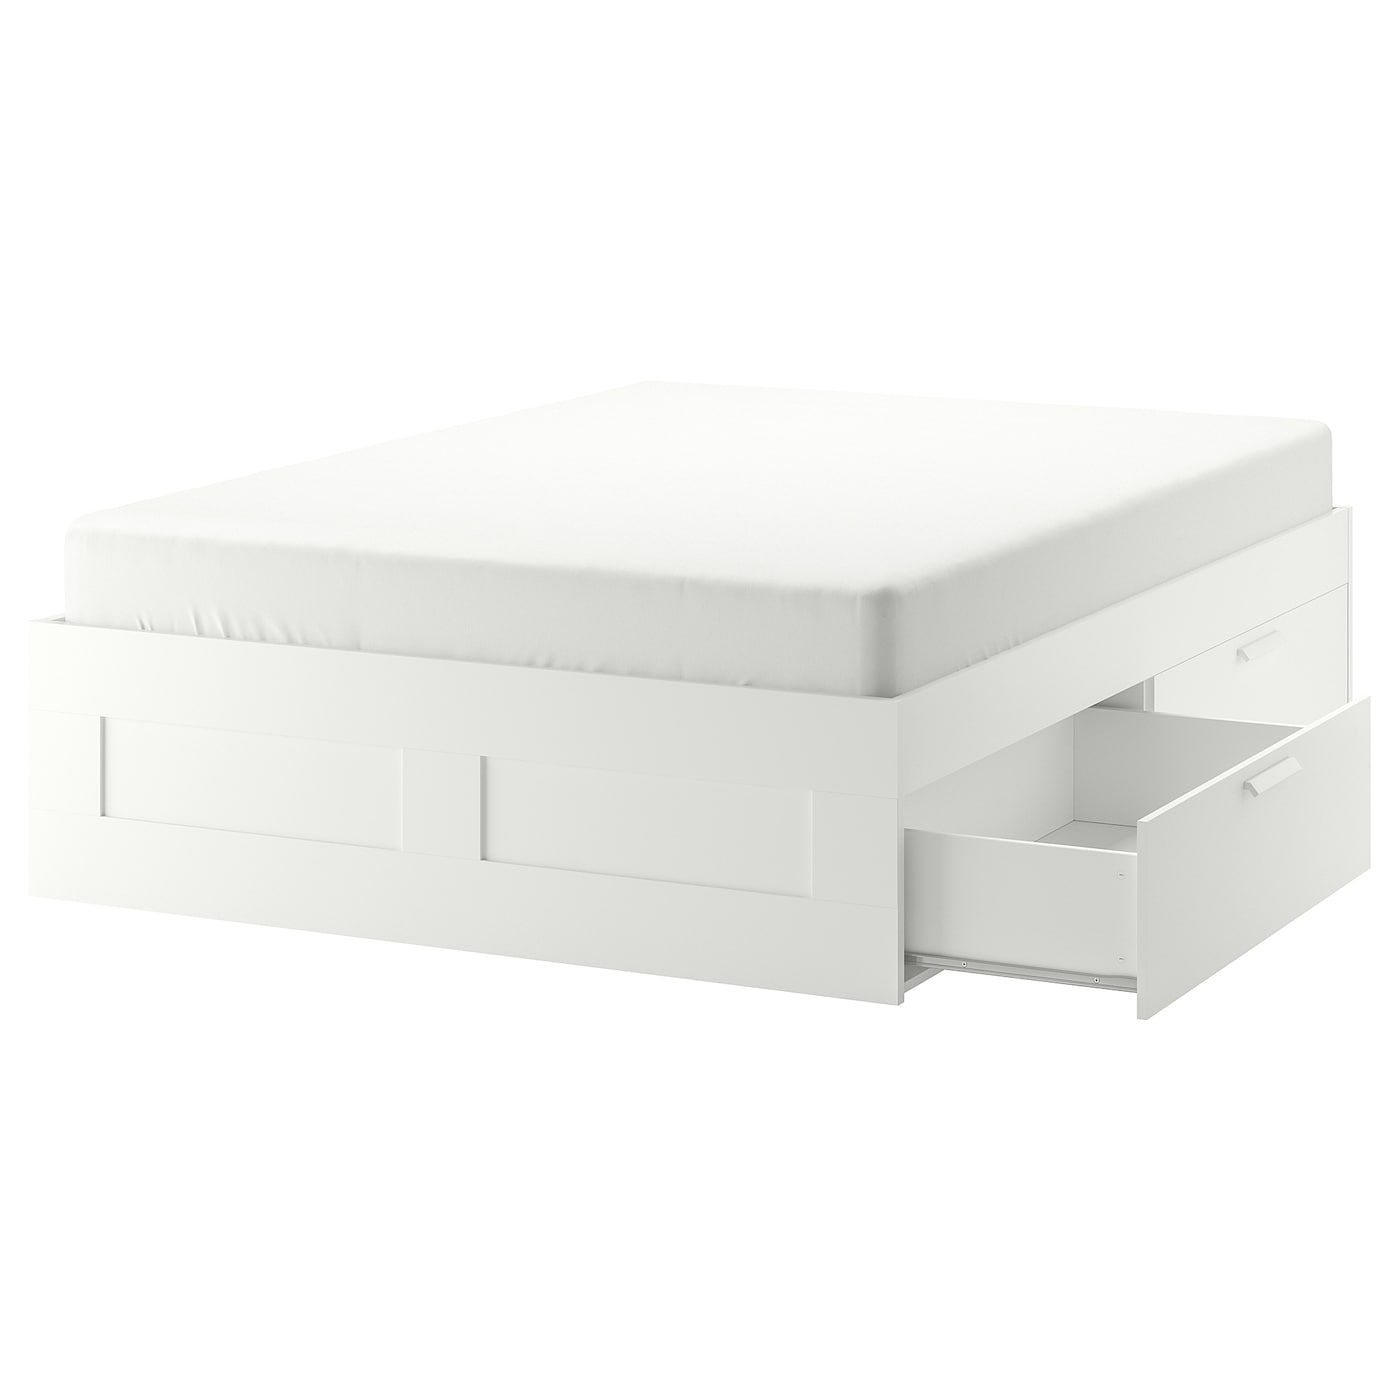 Каркас кровати с ящиками - IKEA BRIMNES, 200х160 см, белый, БРИМНЕС ИКЕА